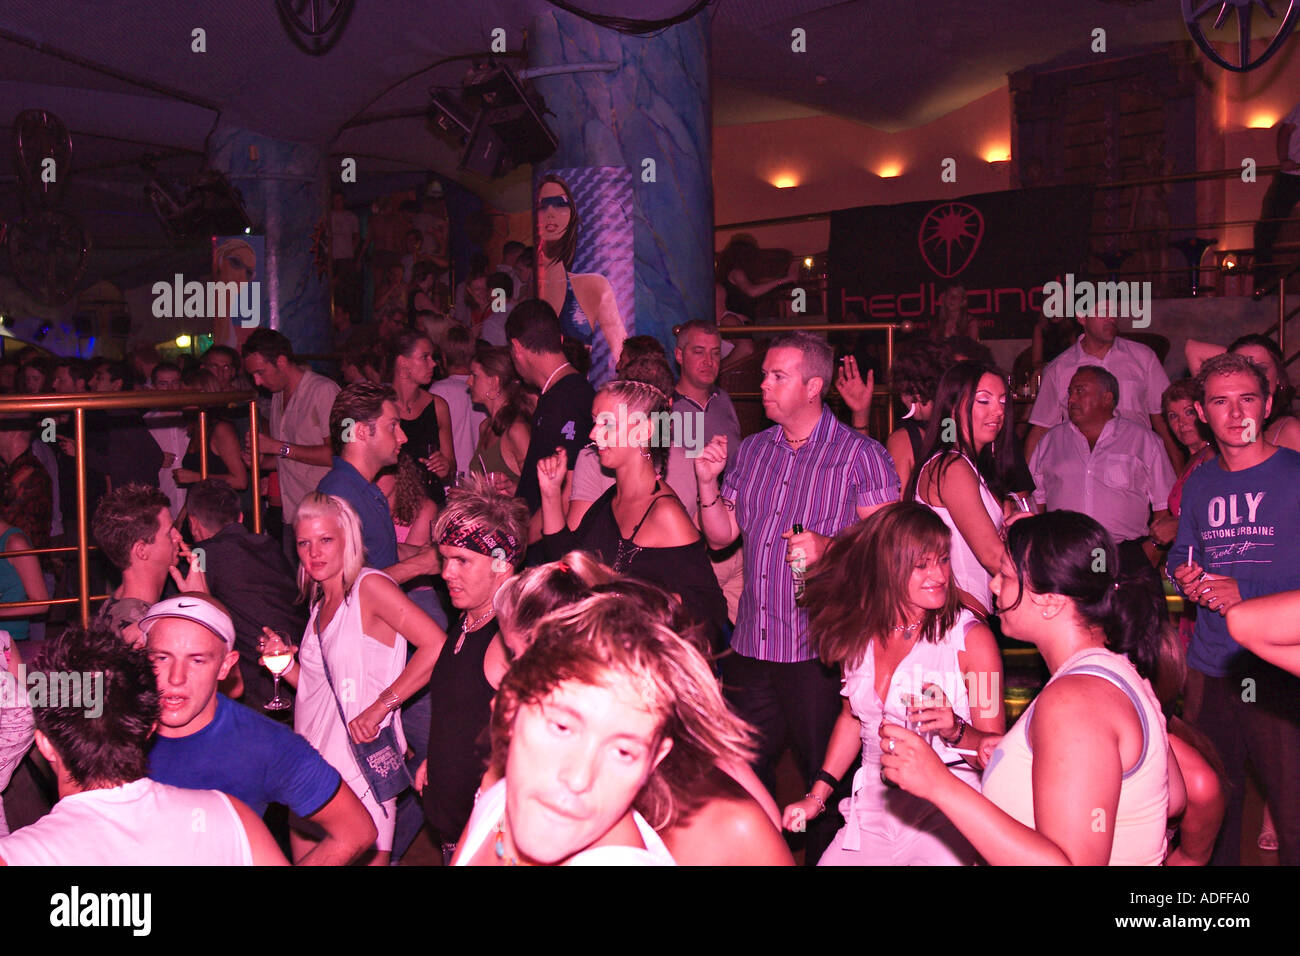 Club discoteca El Divino a Ibiza Ibiza Foto stock - Alamy